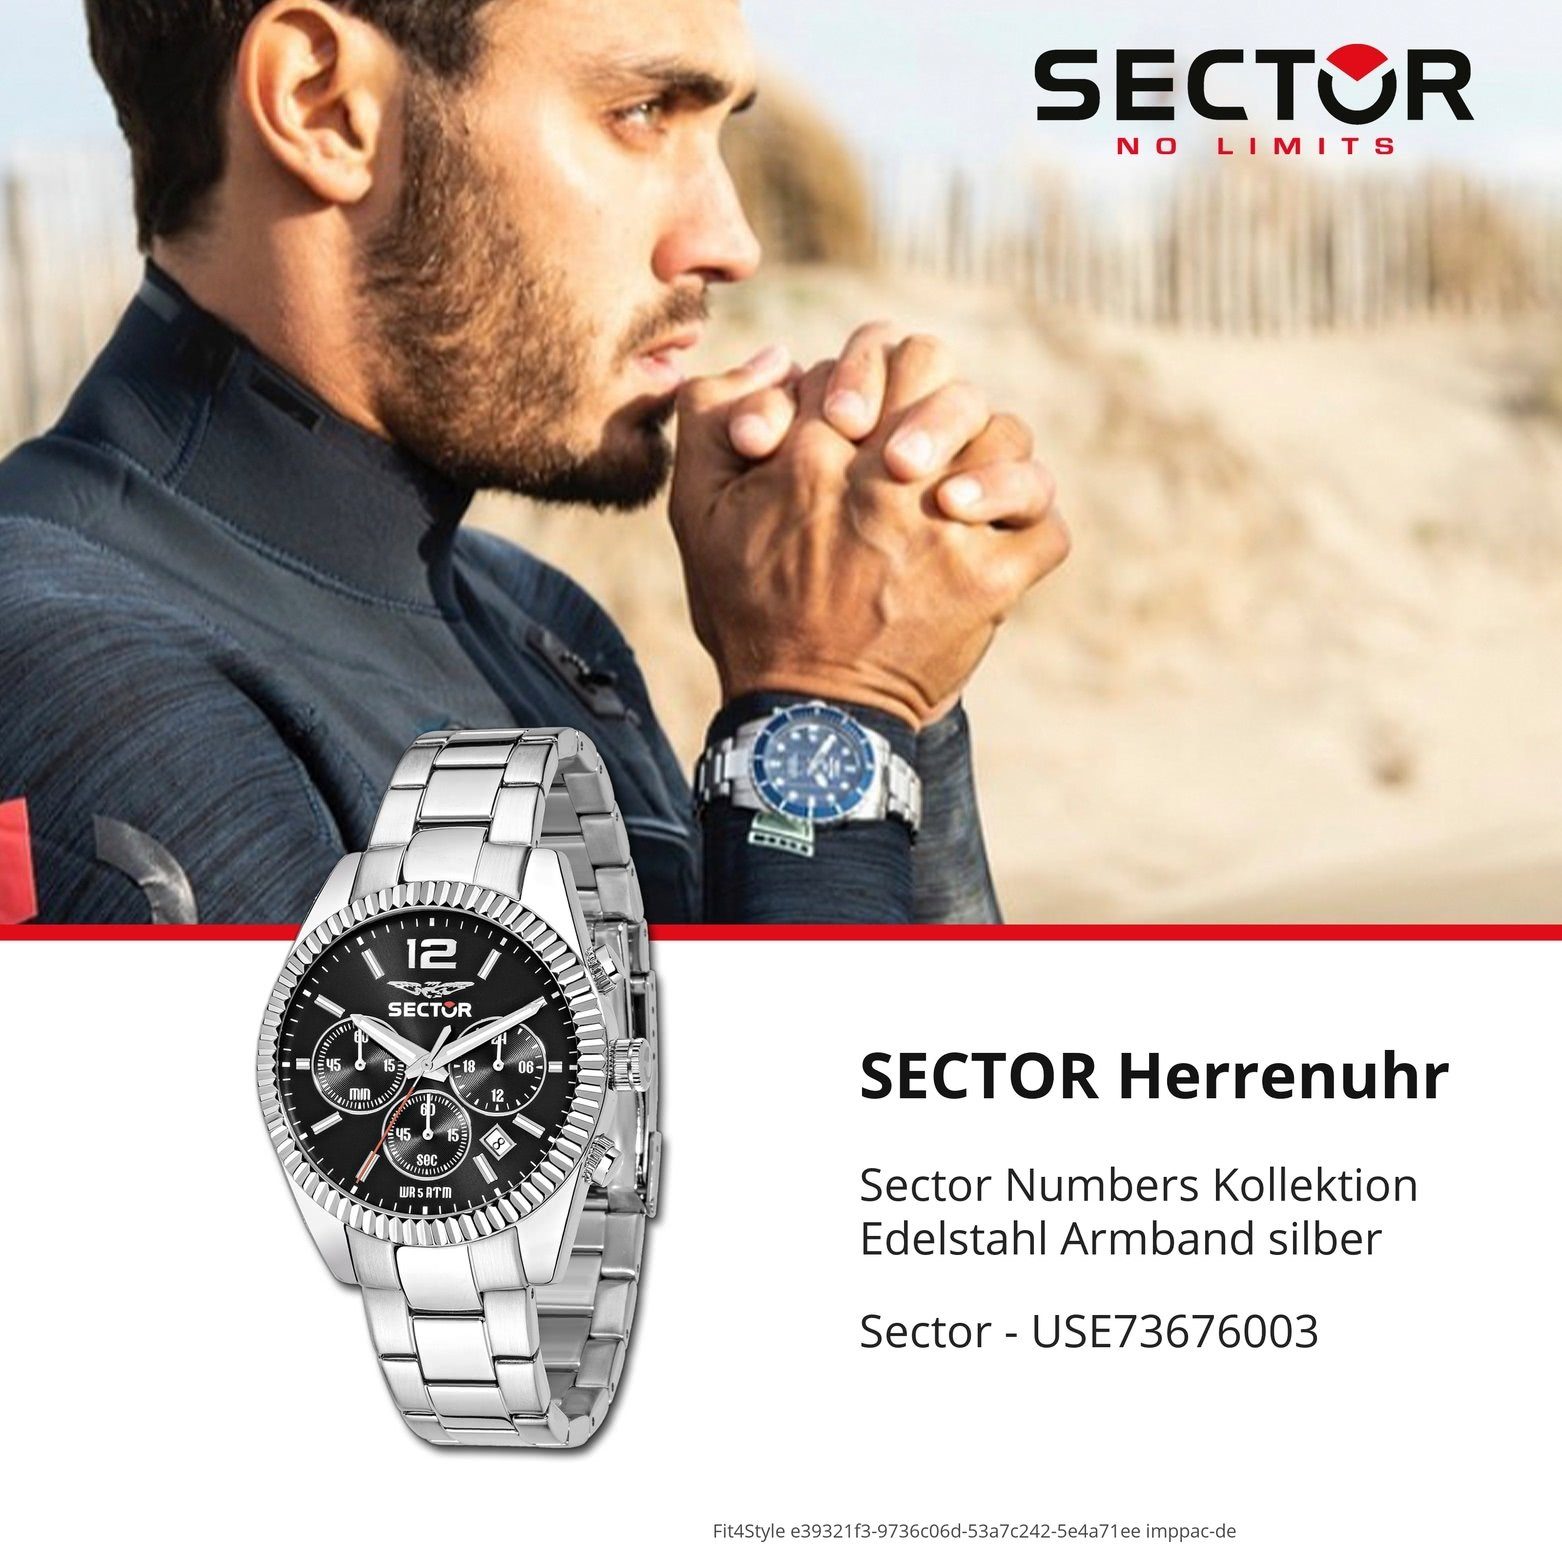 (ca. Sector Herren Herren rund, silber, Sector Edelstahlarmband 43mm), Chronograph Armbanduhr Armbanduhr Chrono, Fashion